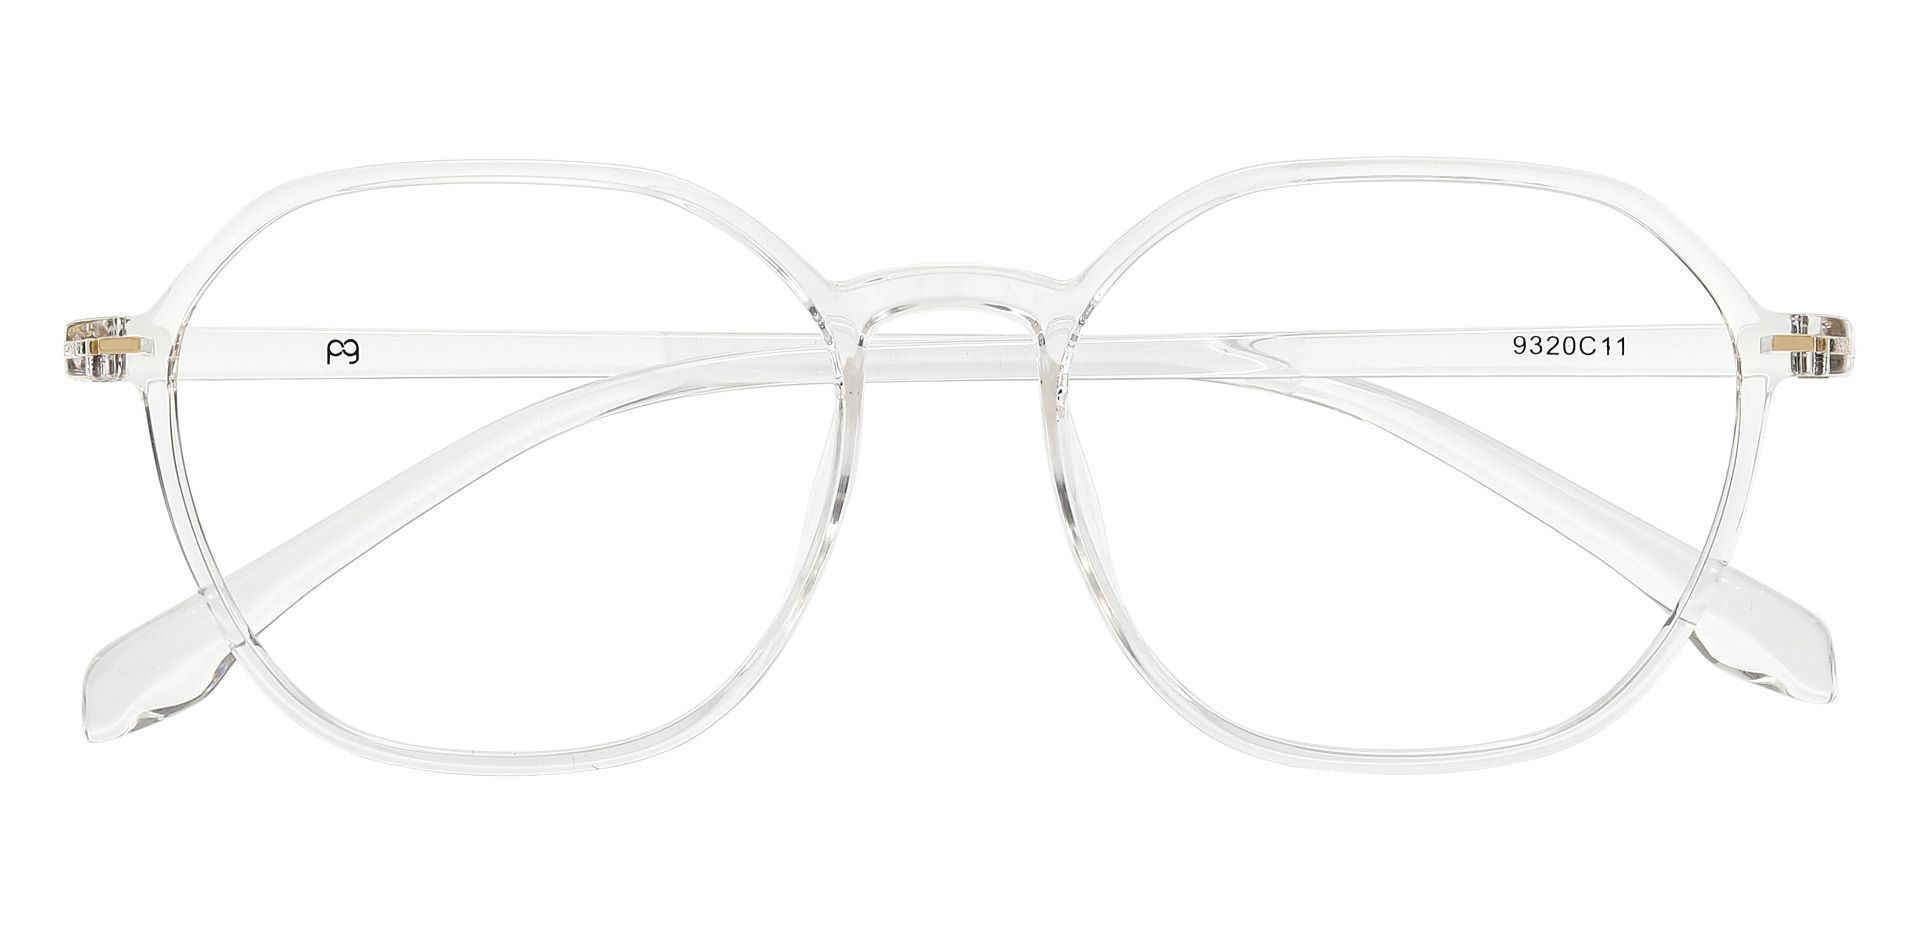 Detroit Geometric Lined Bifocal Glasses - Clear